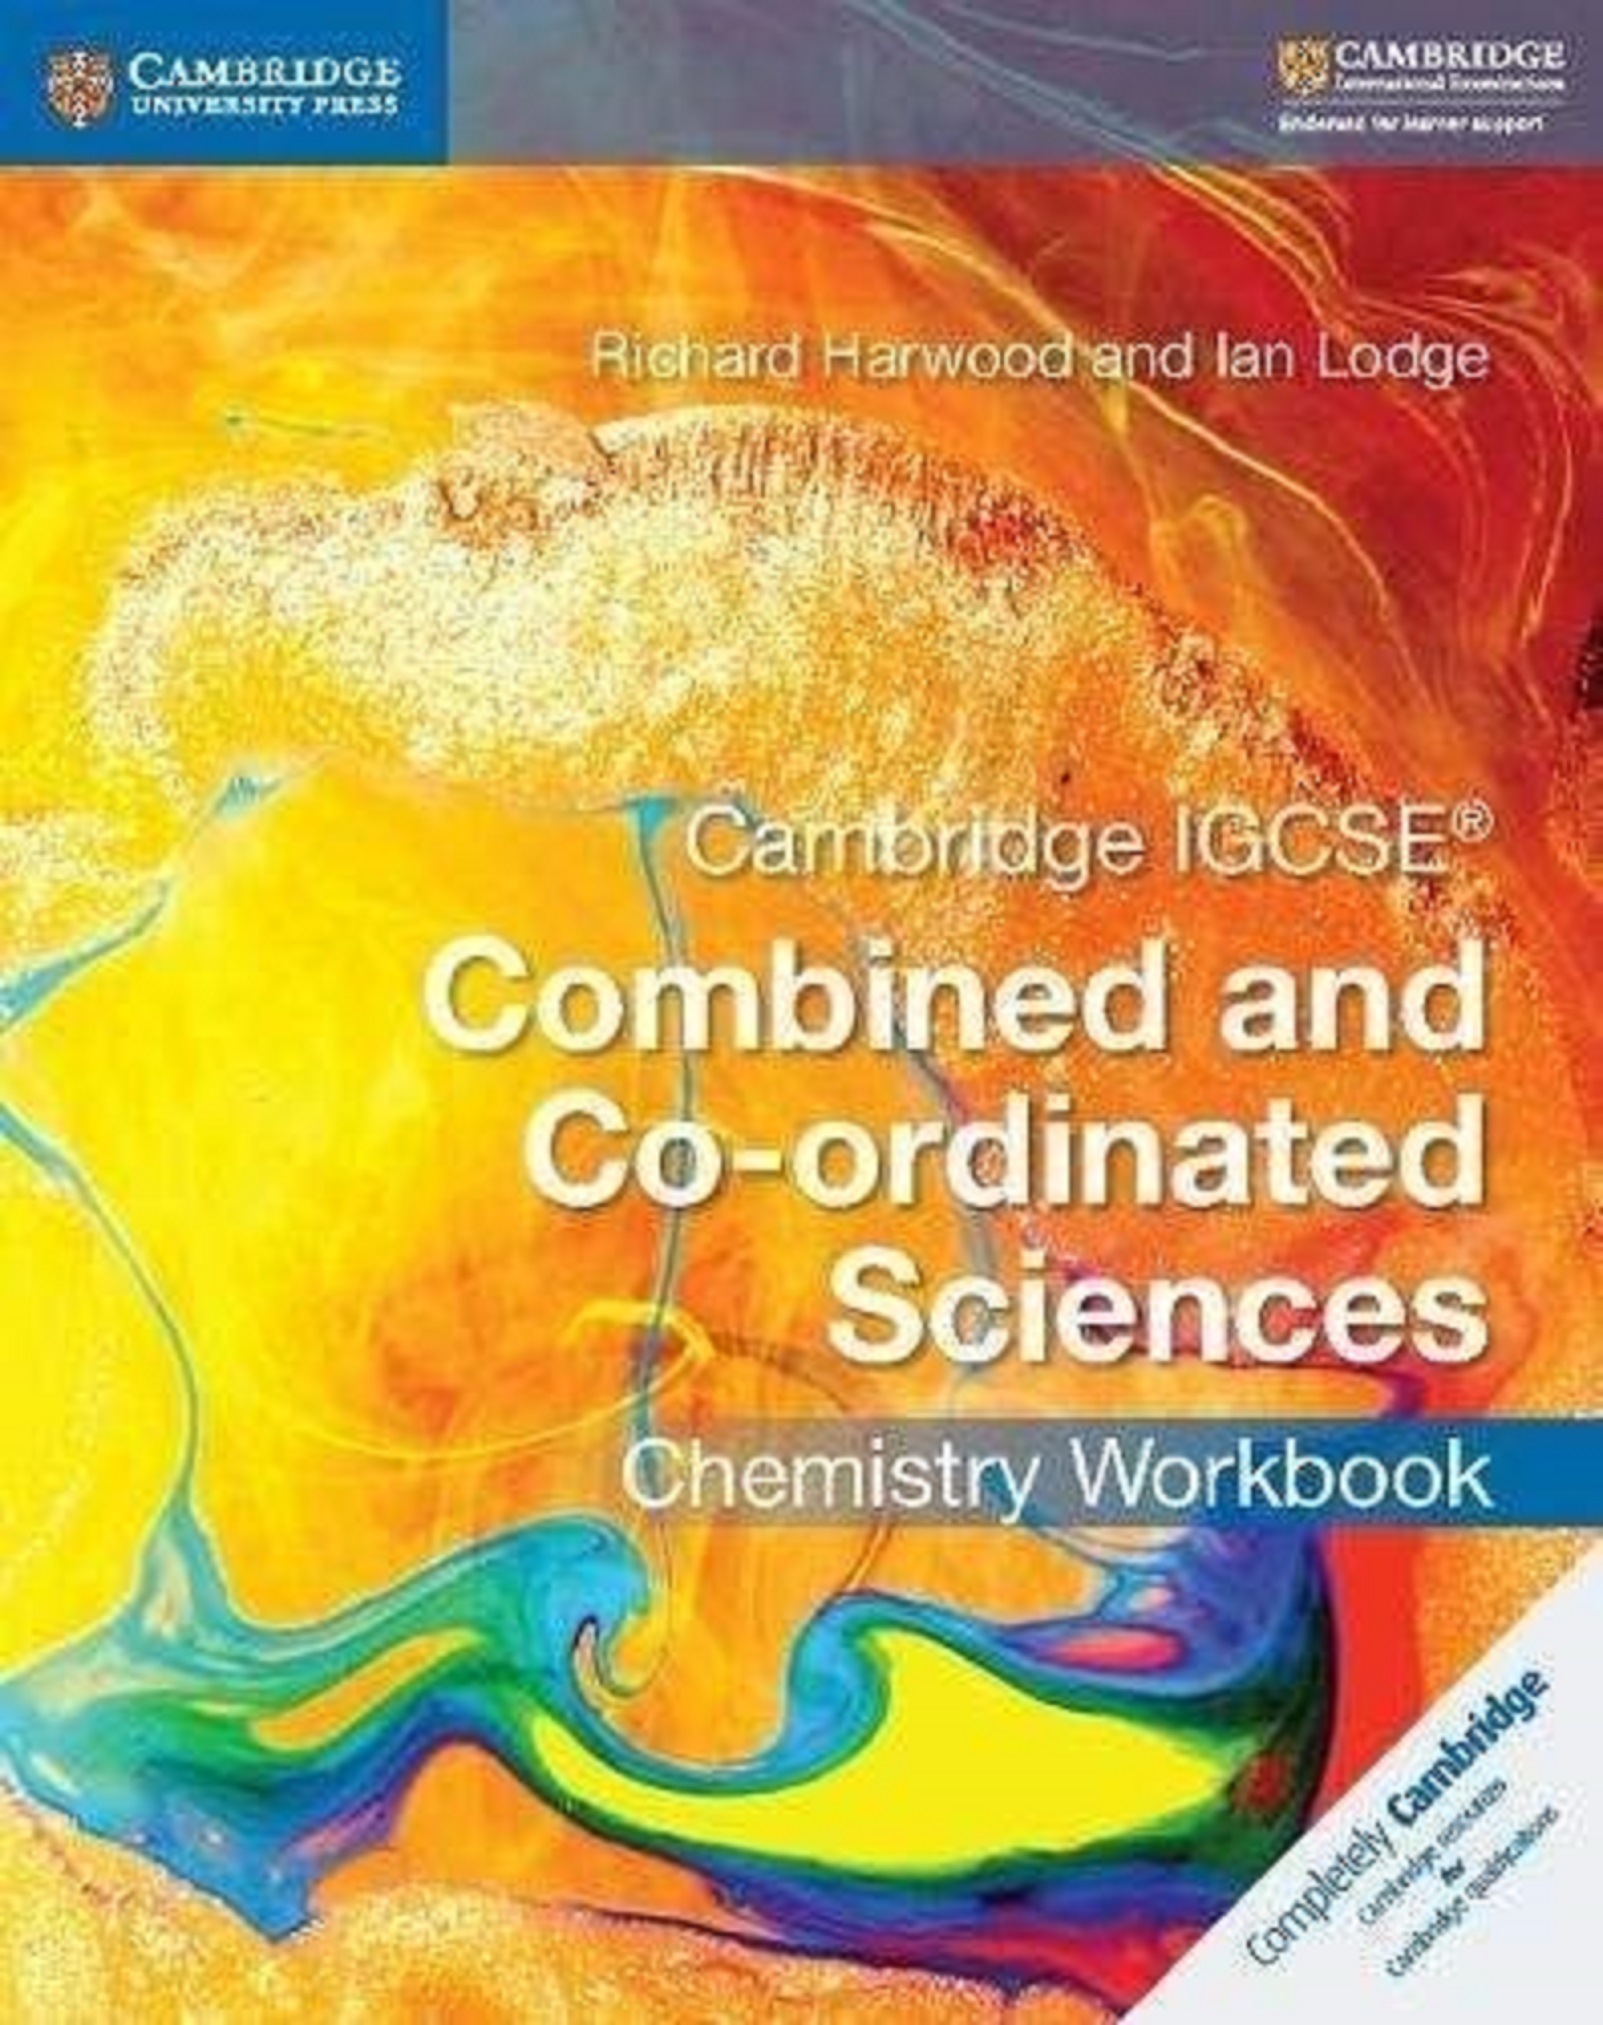 Cambridge IGCSE (R) Combined and Co-ordinated Sciences Chemistry Workbook | Richard Harwood, Ian Lodge